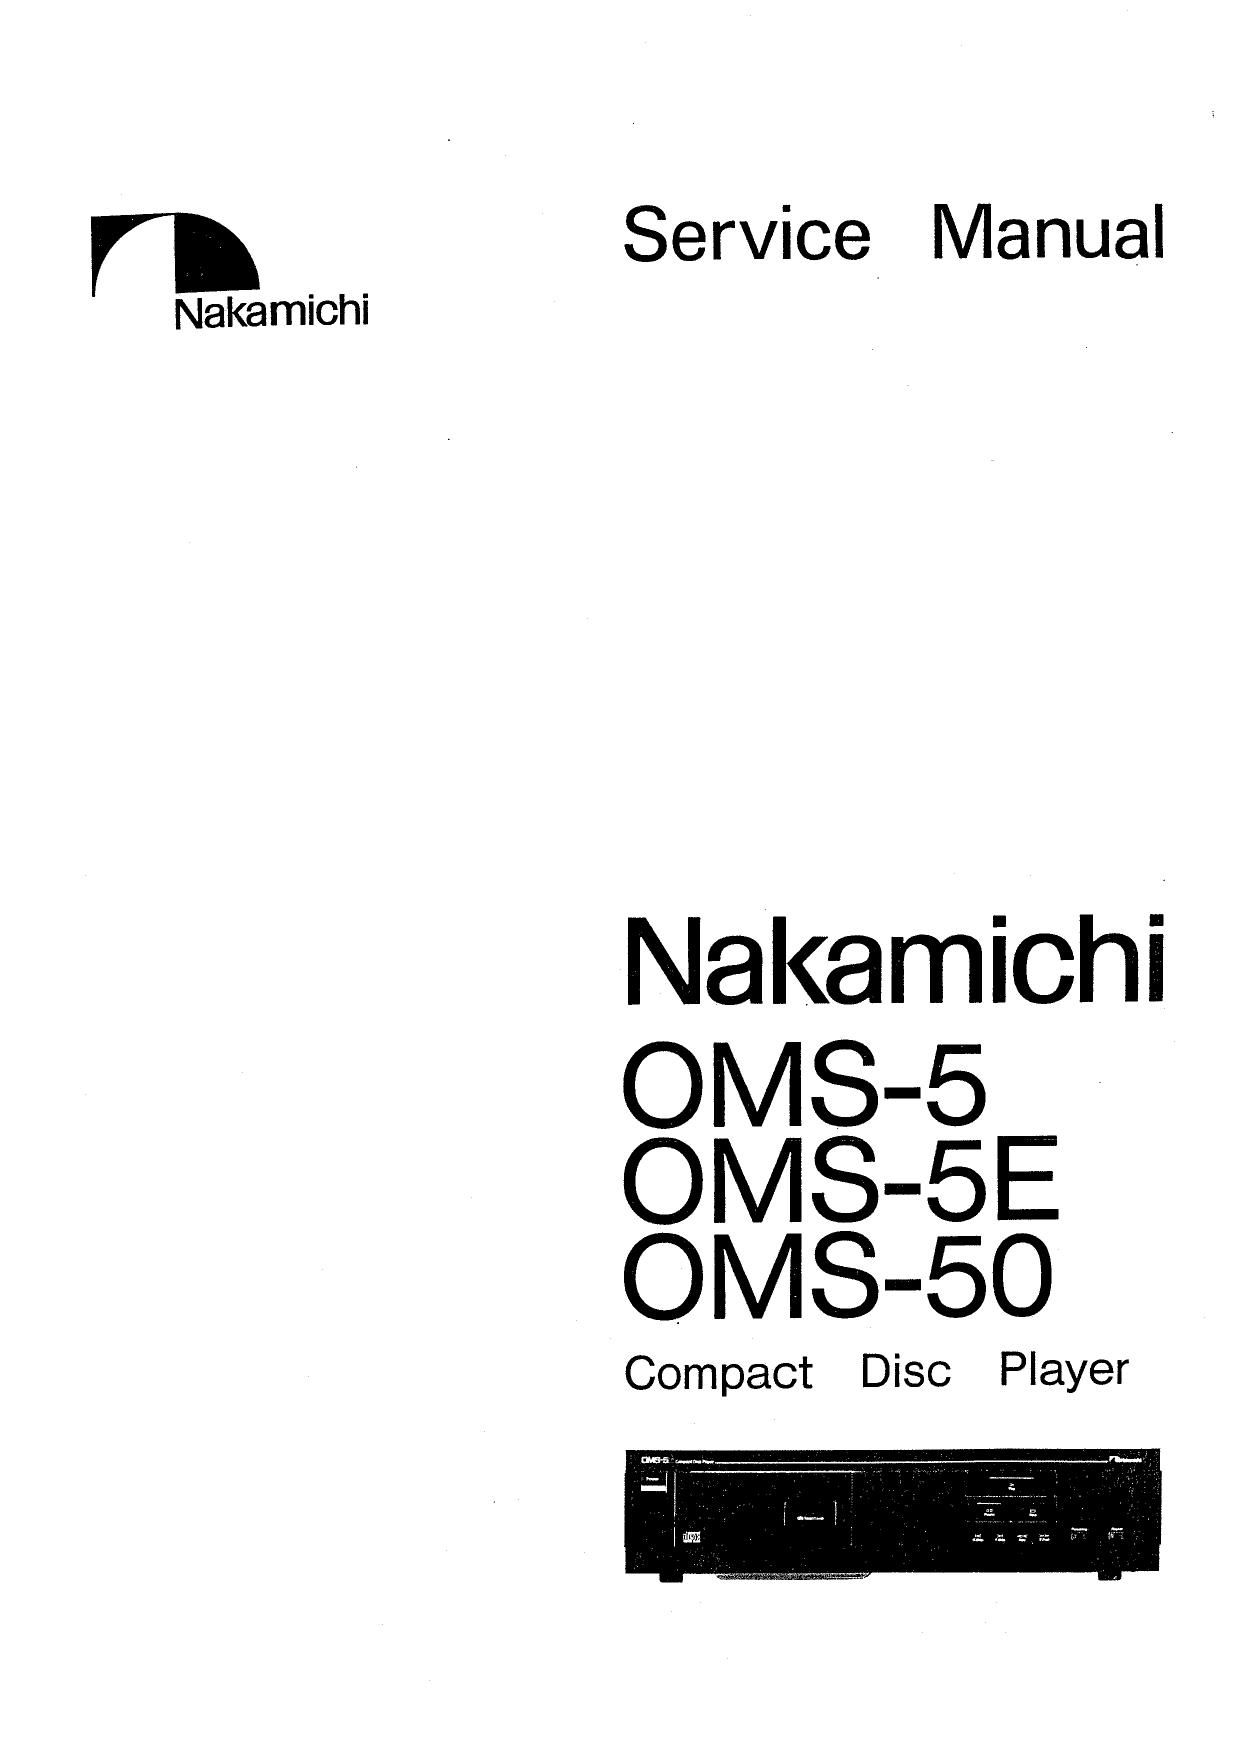 Nakamichi OMS 5E Service Manual